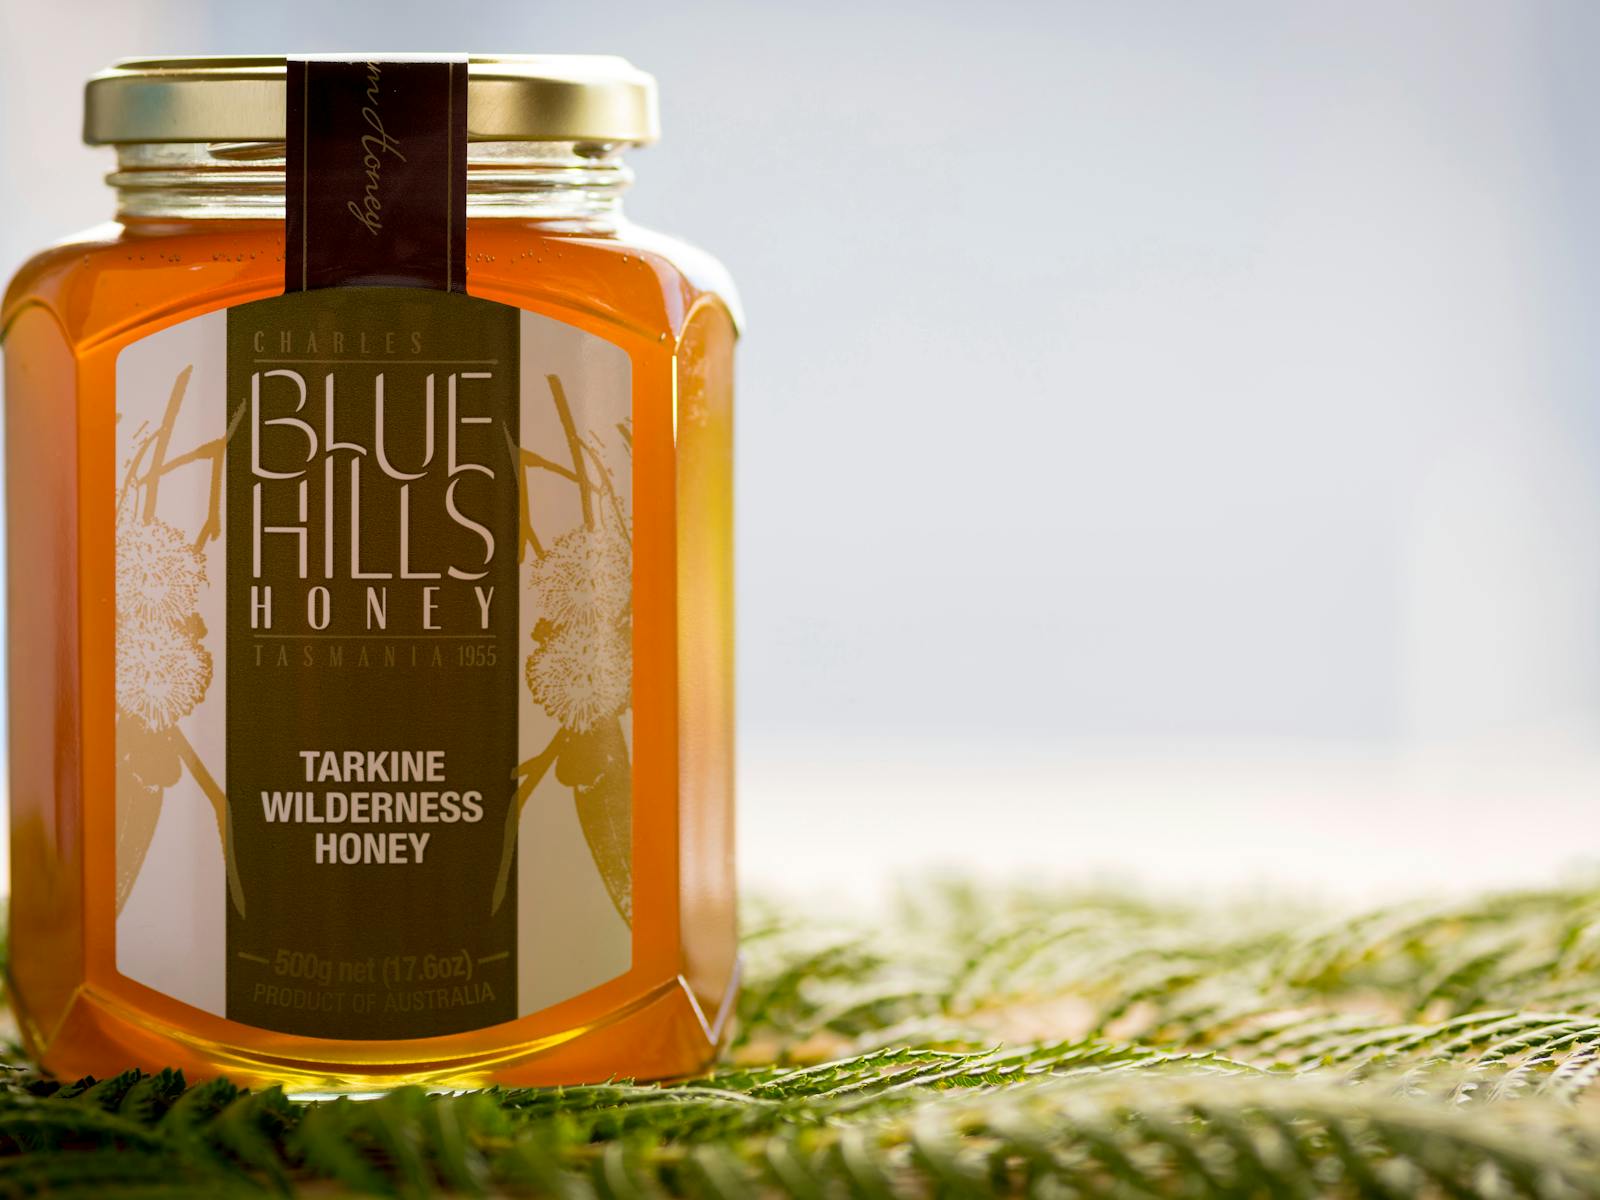 Try some Tasmania honey at Blue Hills Honey